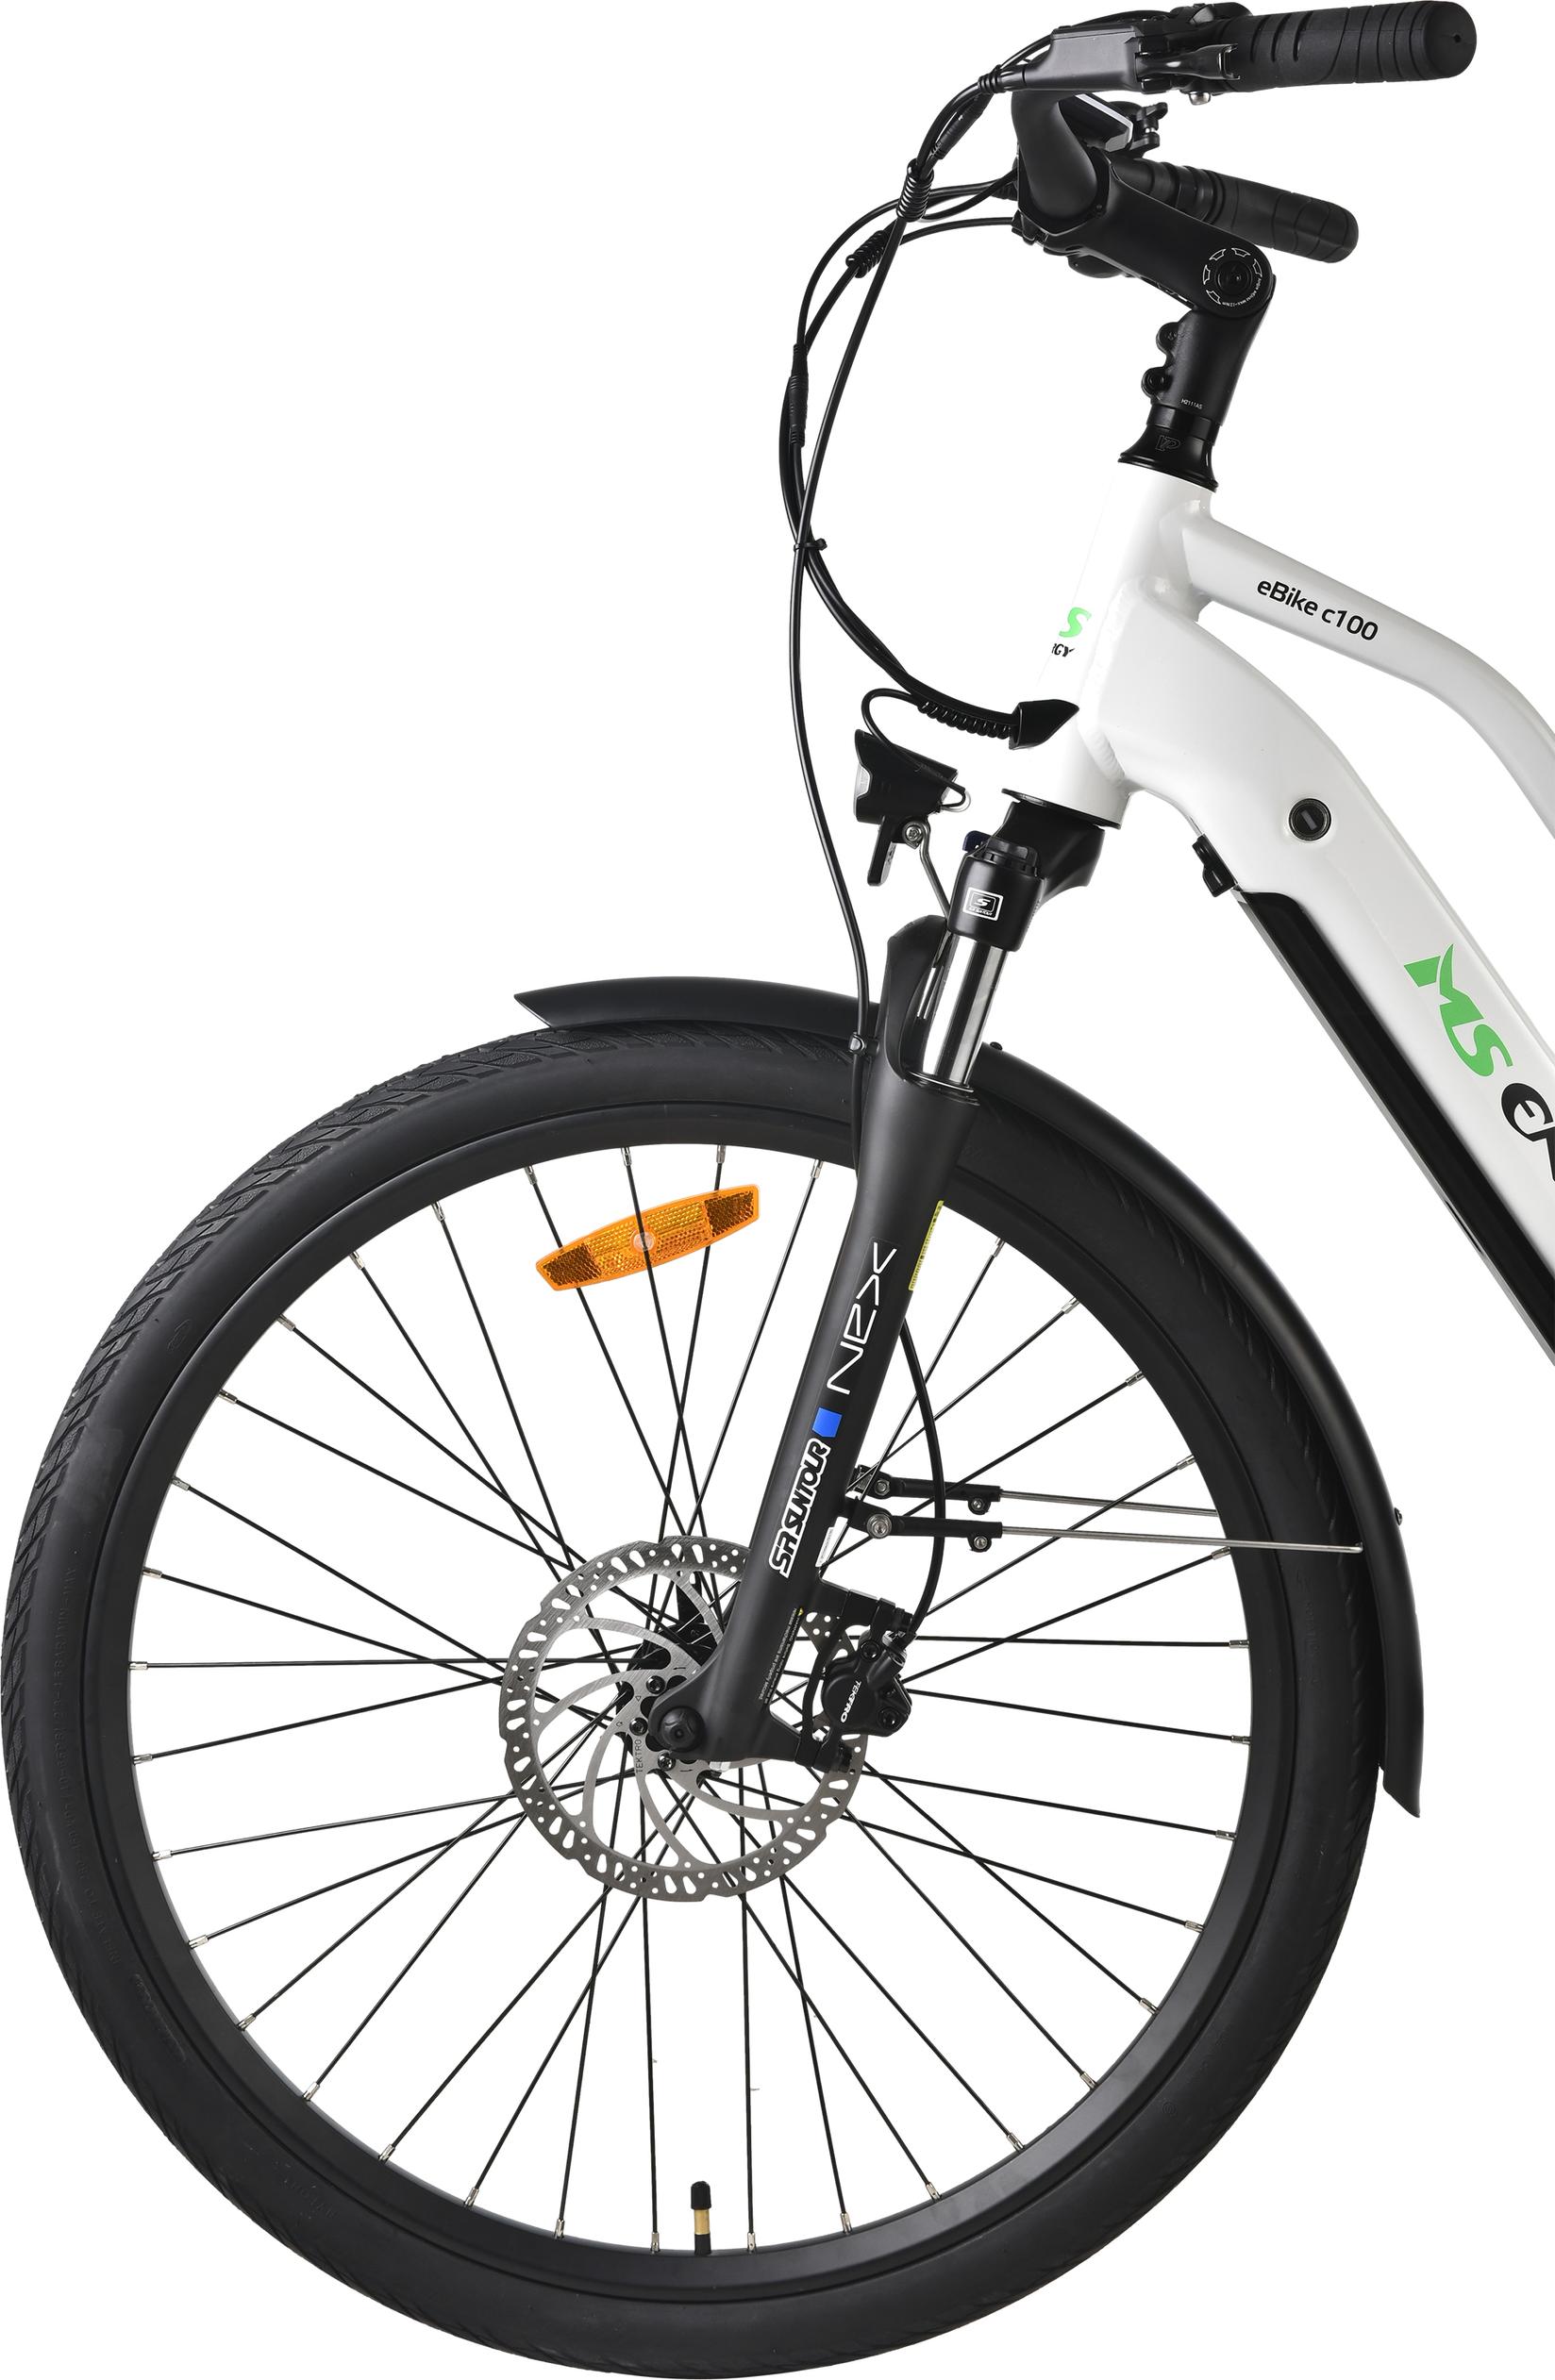 Selected image for MS ENERGY Električni bicikl eBike c100 beli